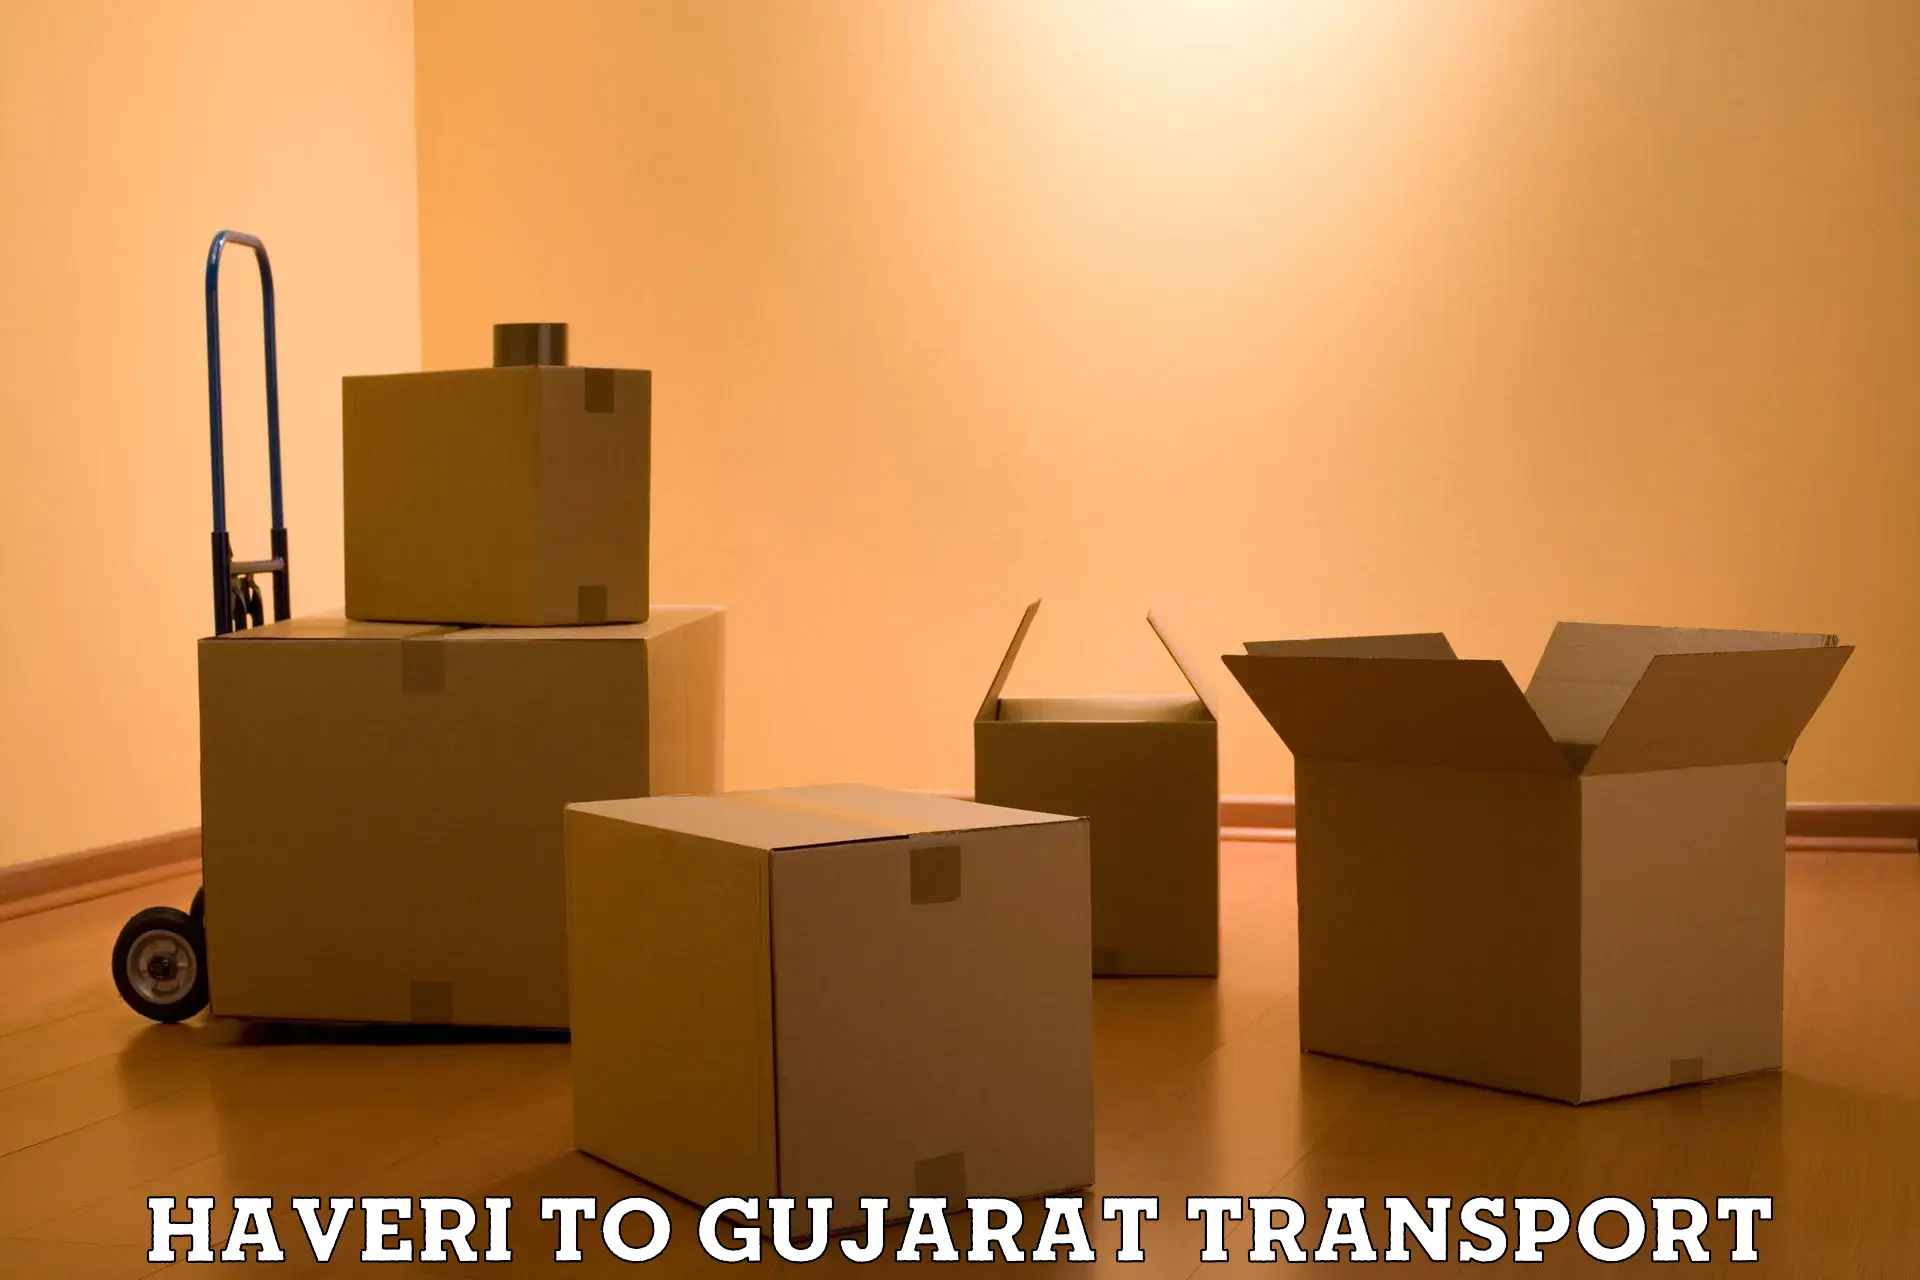 Furniture transport service Haveri to Gujarat